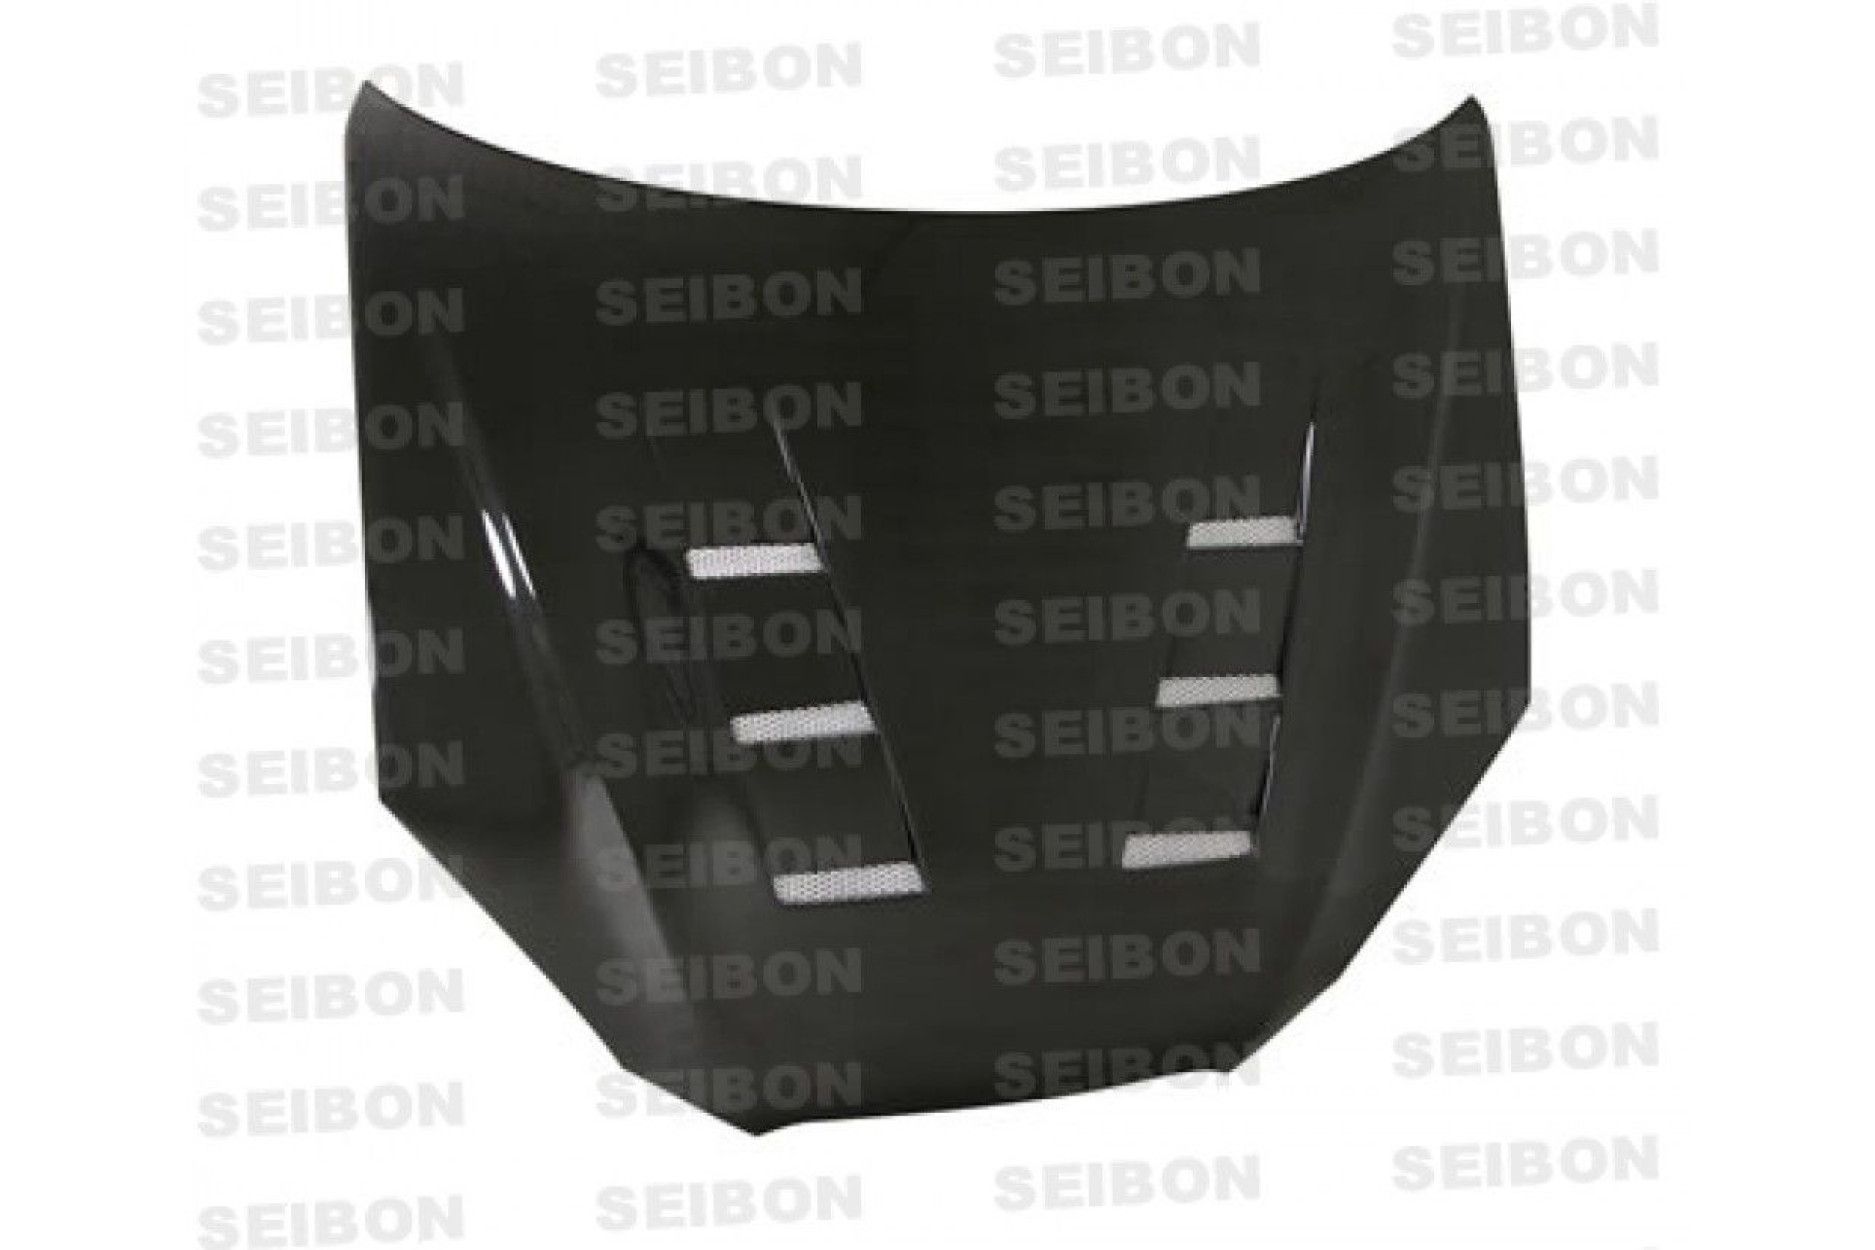 Seibon carbon HOOD for HYUNDAI GENESIS 2DR (BH14) 4 Cyl & V6 Model 2008 - 2012 TS-style